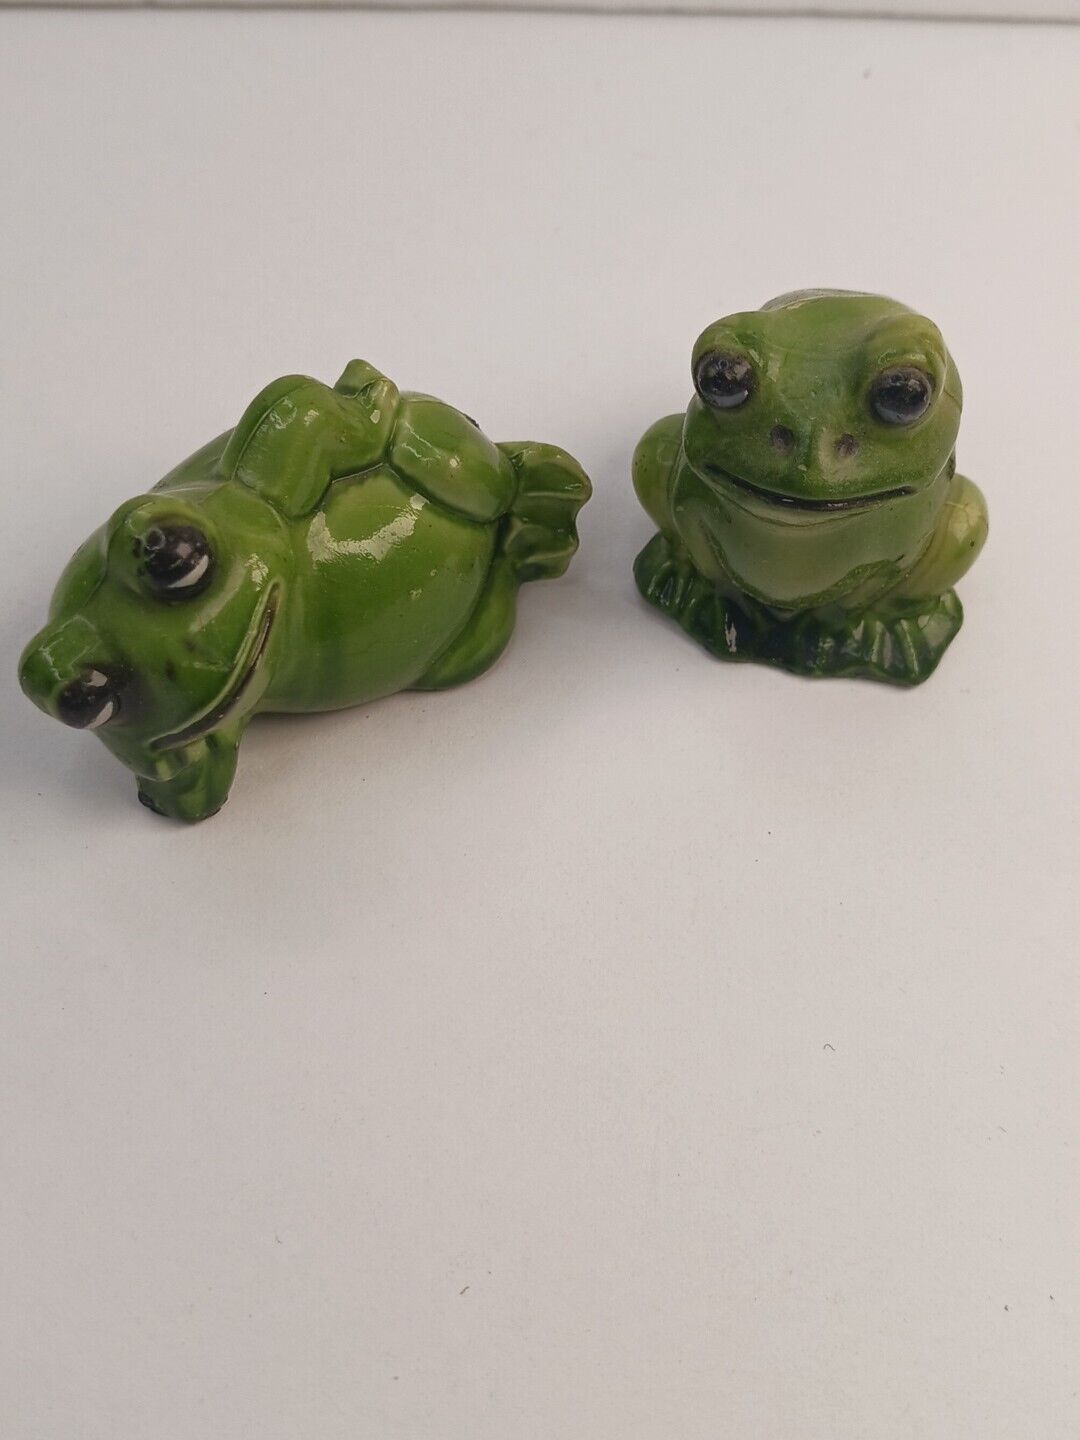 Plastic frog figurine statue Shelf Sitter Knick Knack Collectible Hong Kong Vtg